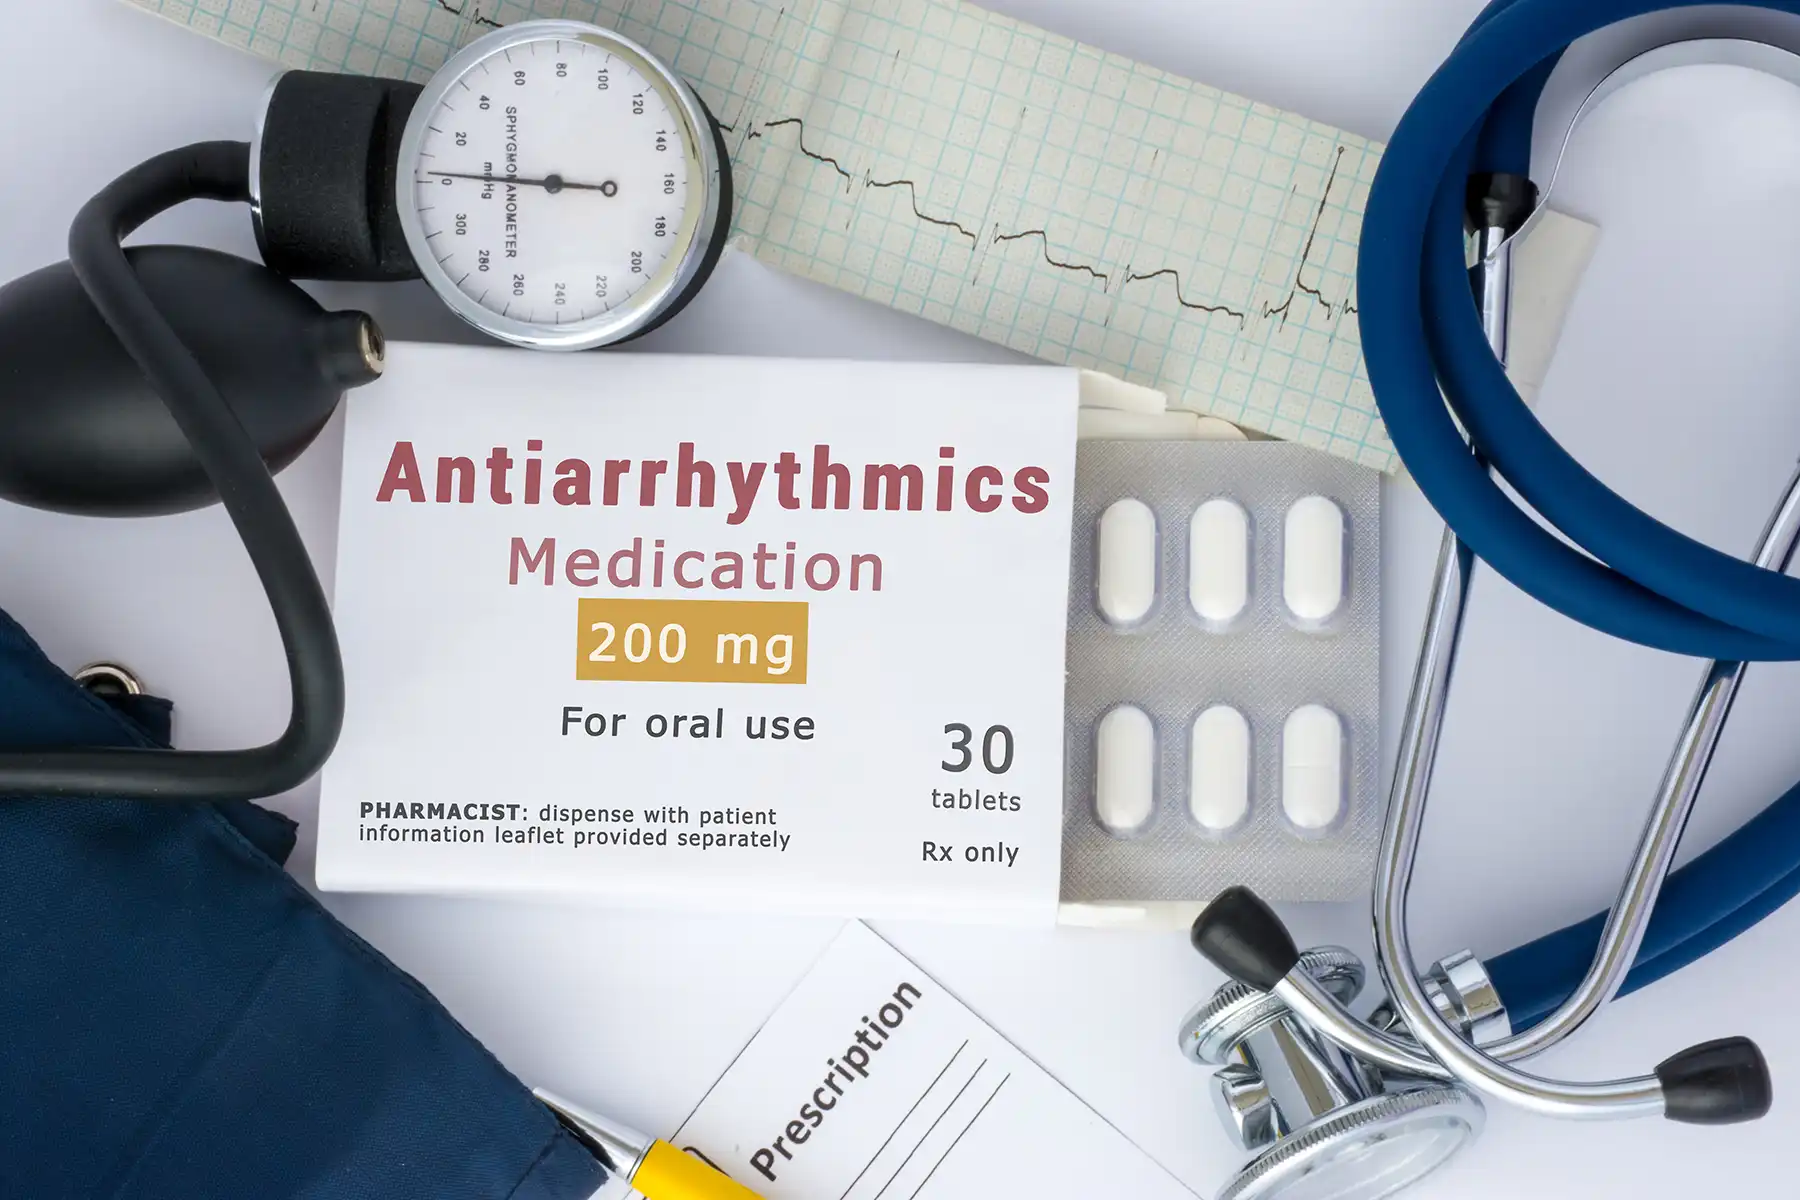 Antiarrhythmic medication